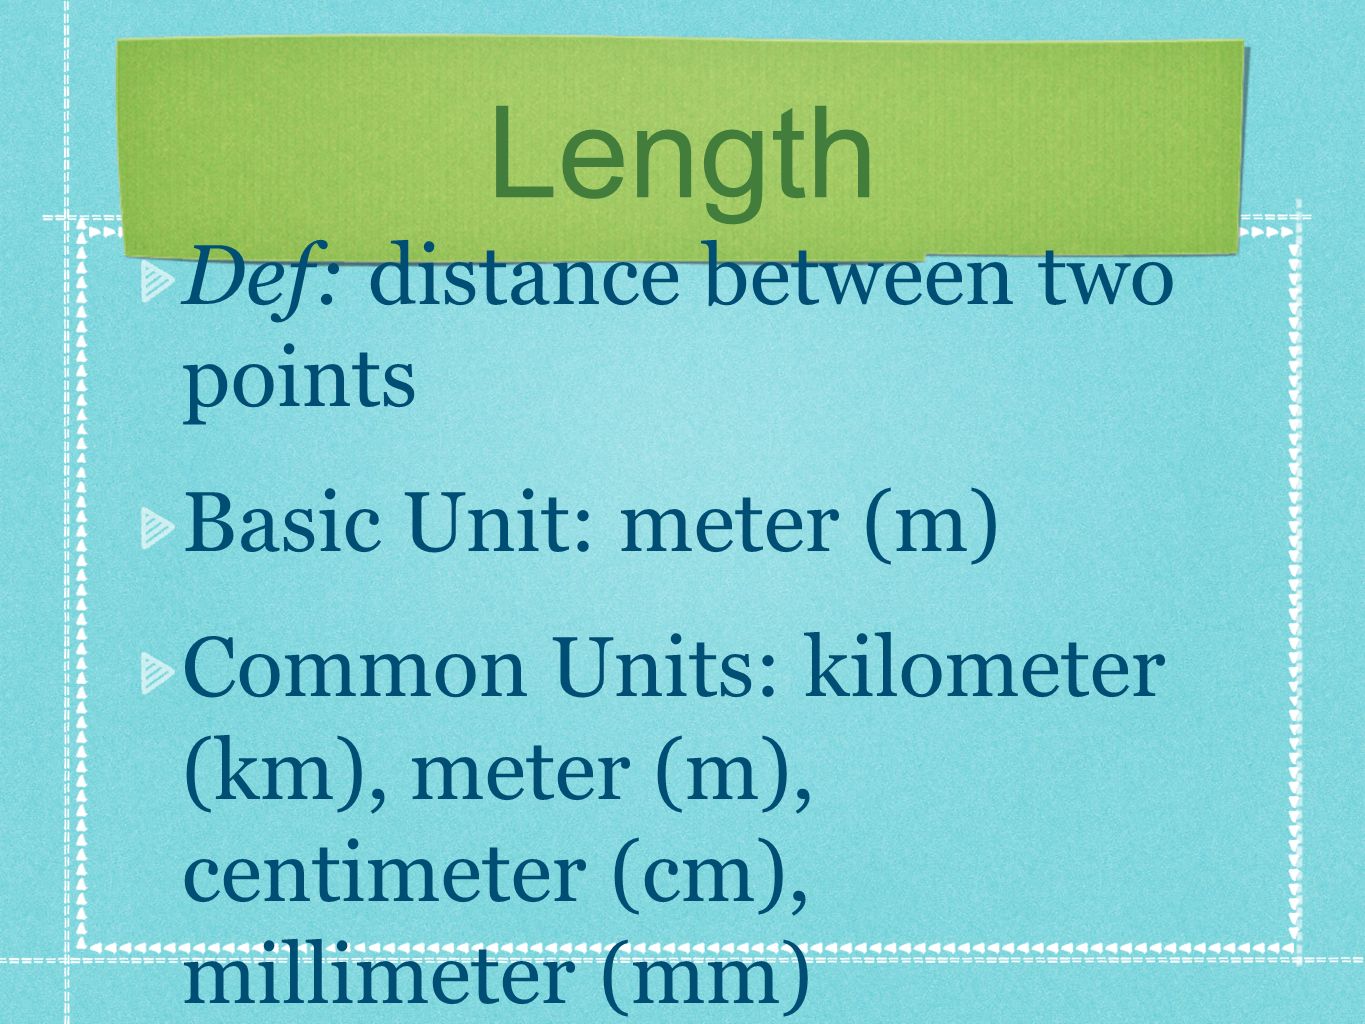 Length Def: distance between two points Basic Unit: meter (m) Common Units: kilometer (km), meter (m), centimeter (cm), millimeter (mm)